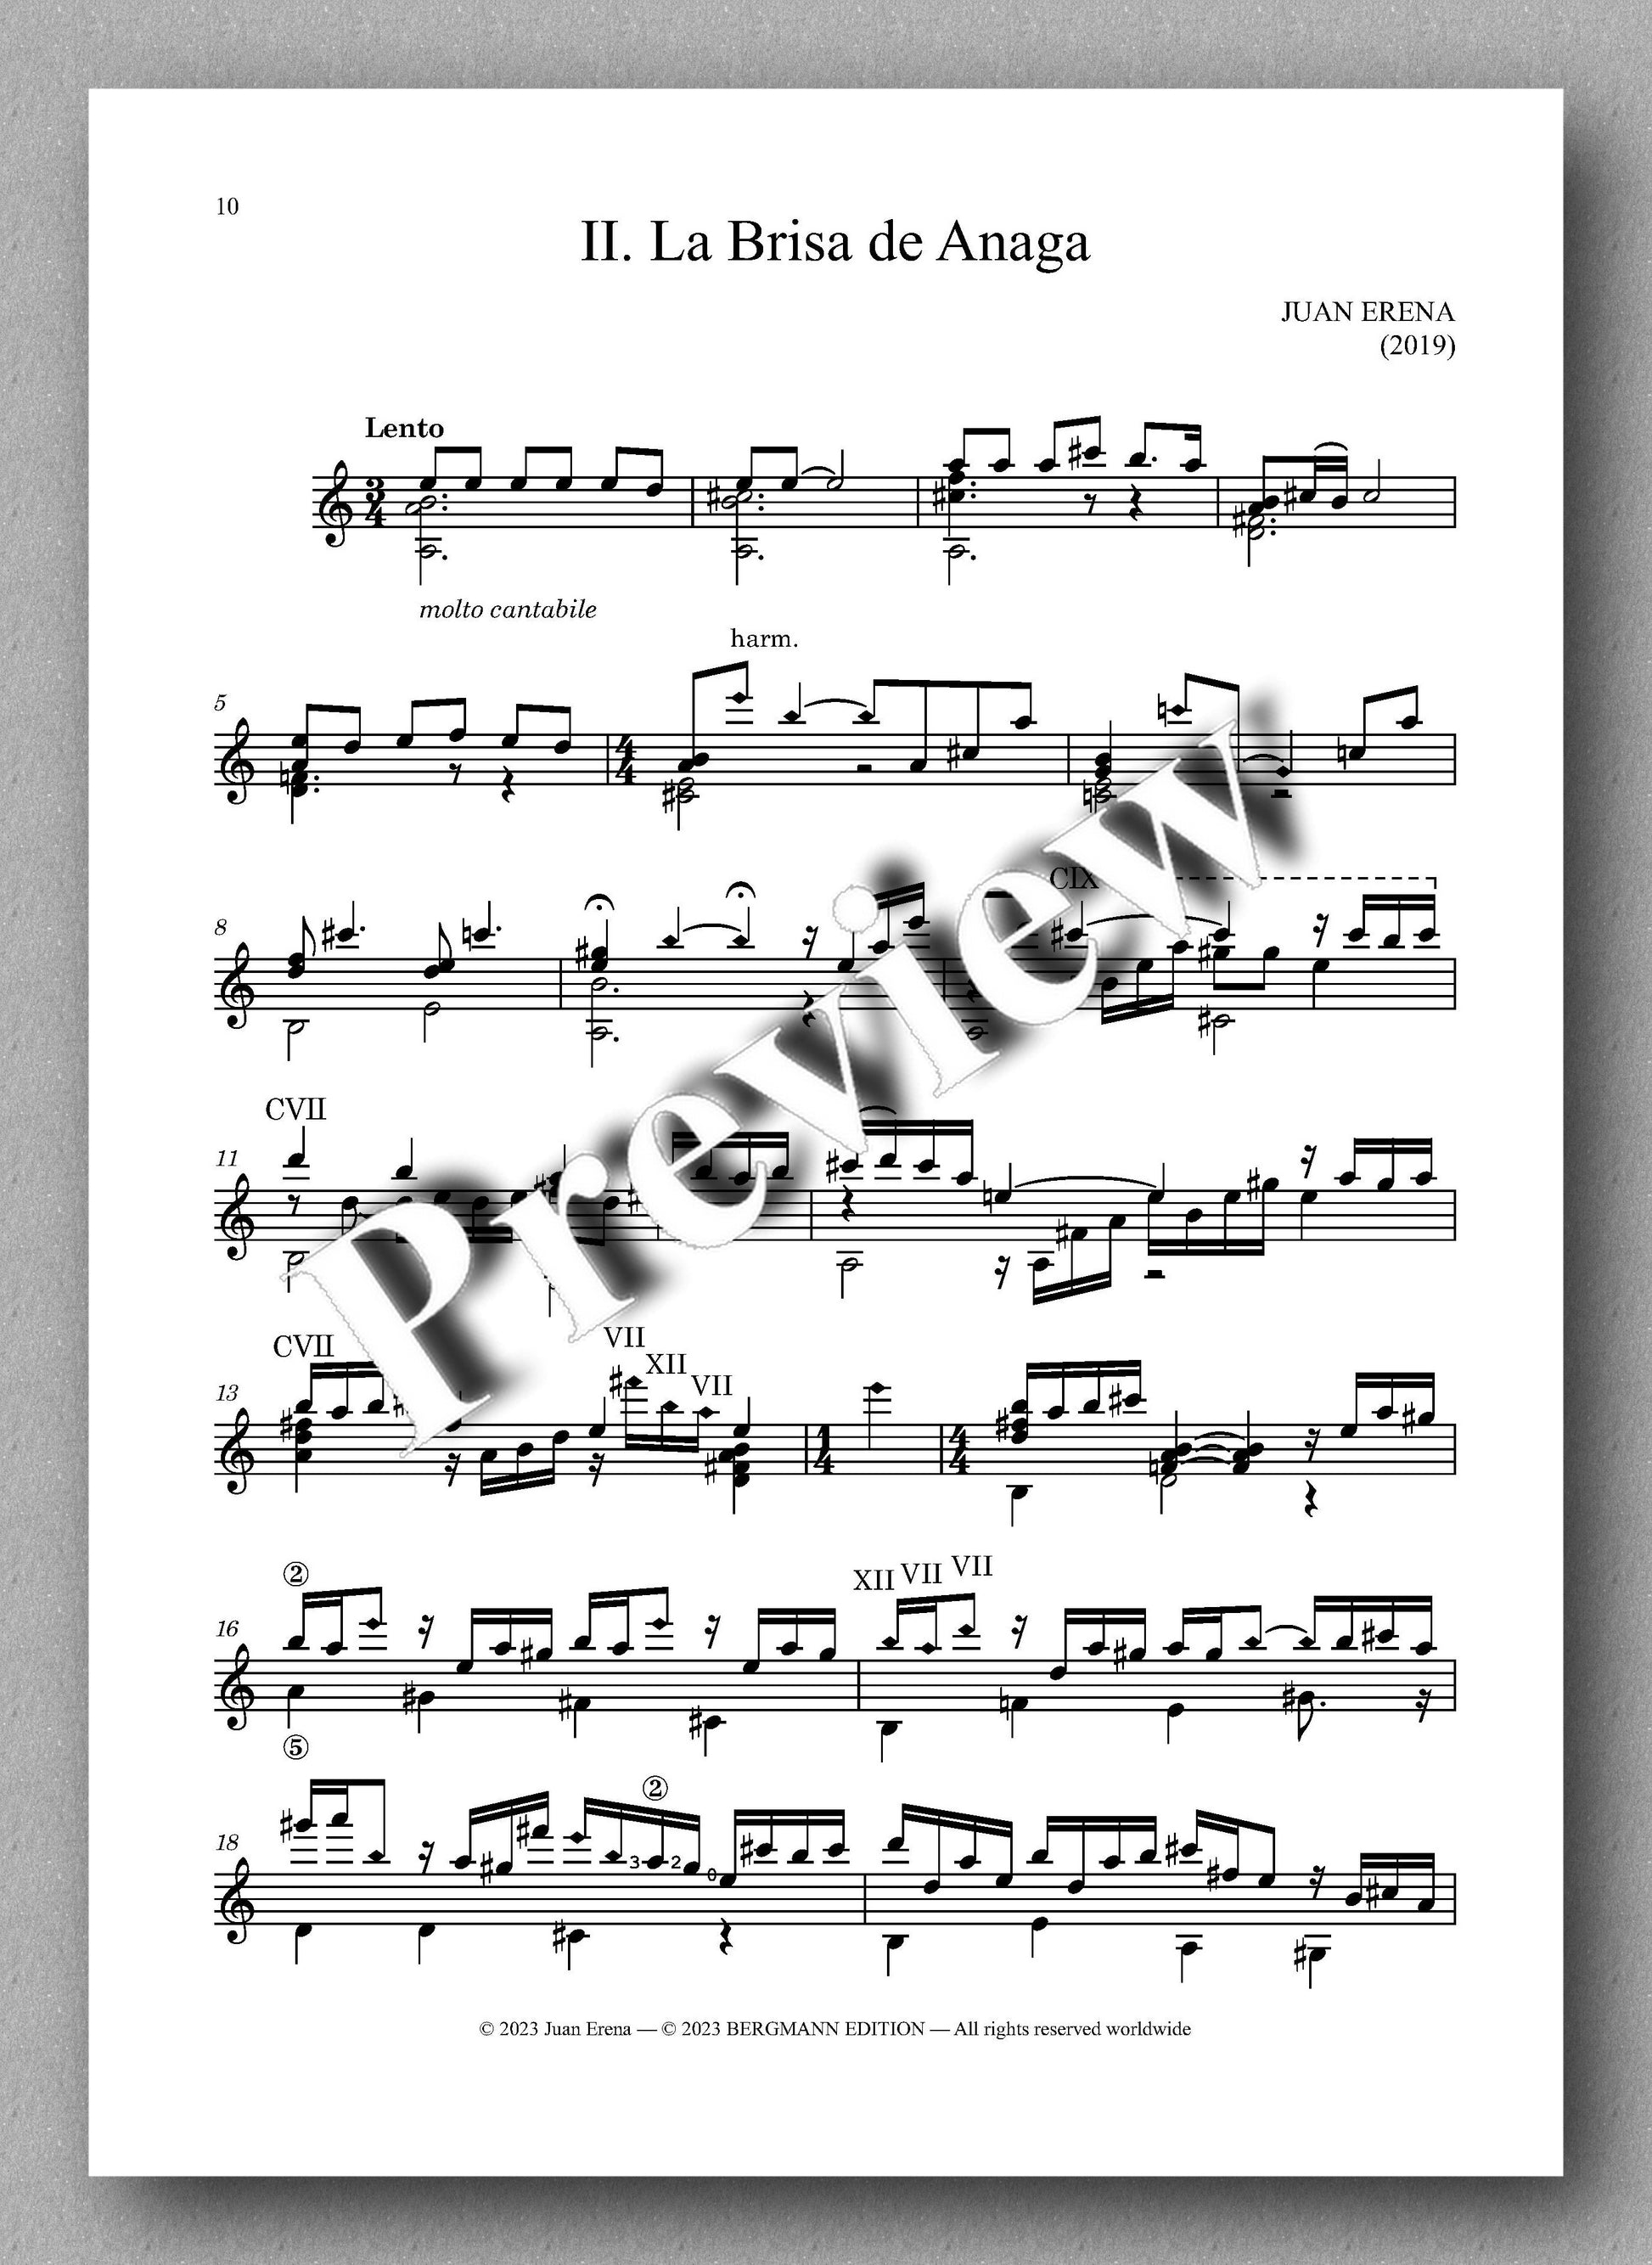 Juan Erena, Sonata III, “ Sonata Insular” - preview of the musicscore 2